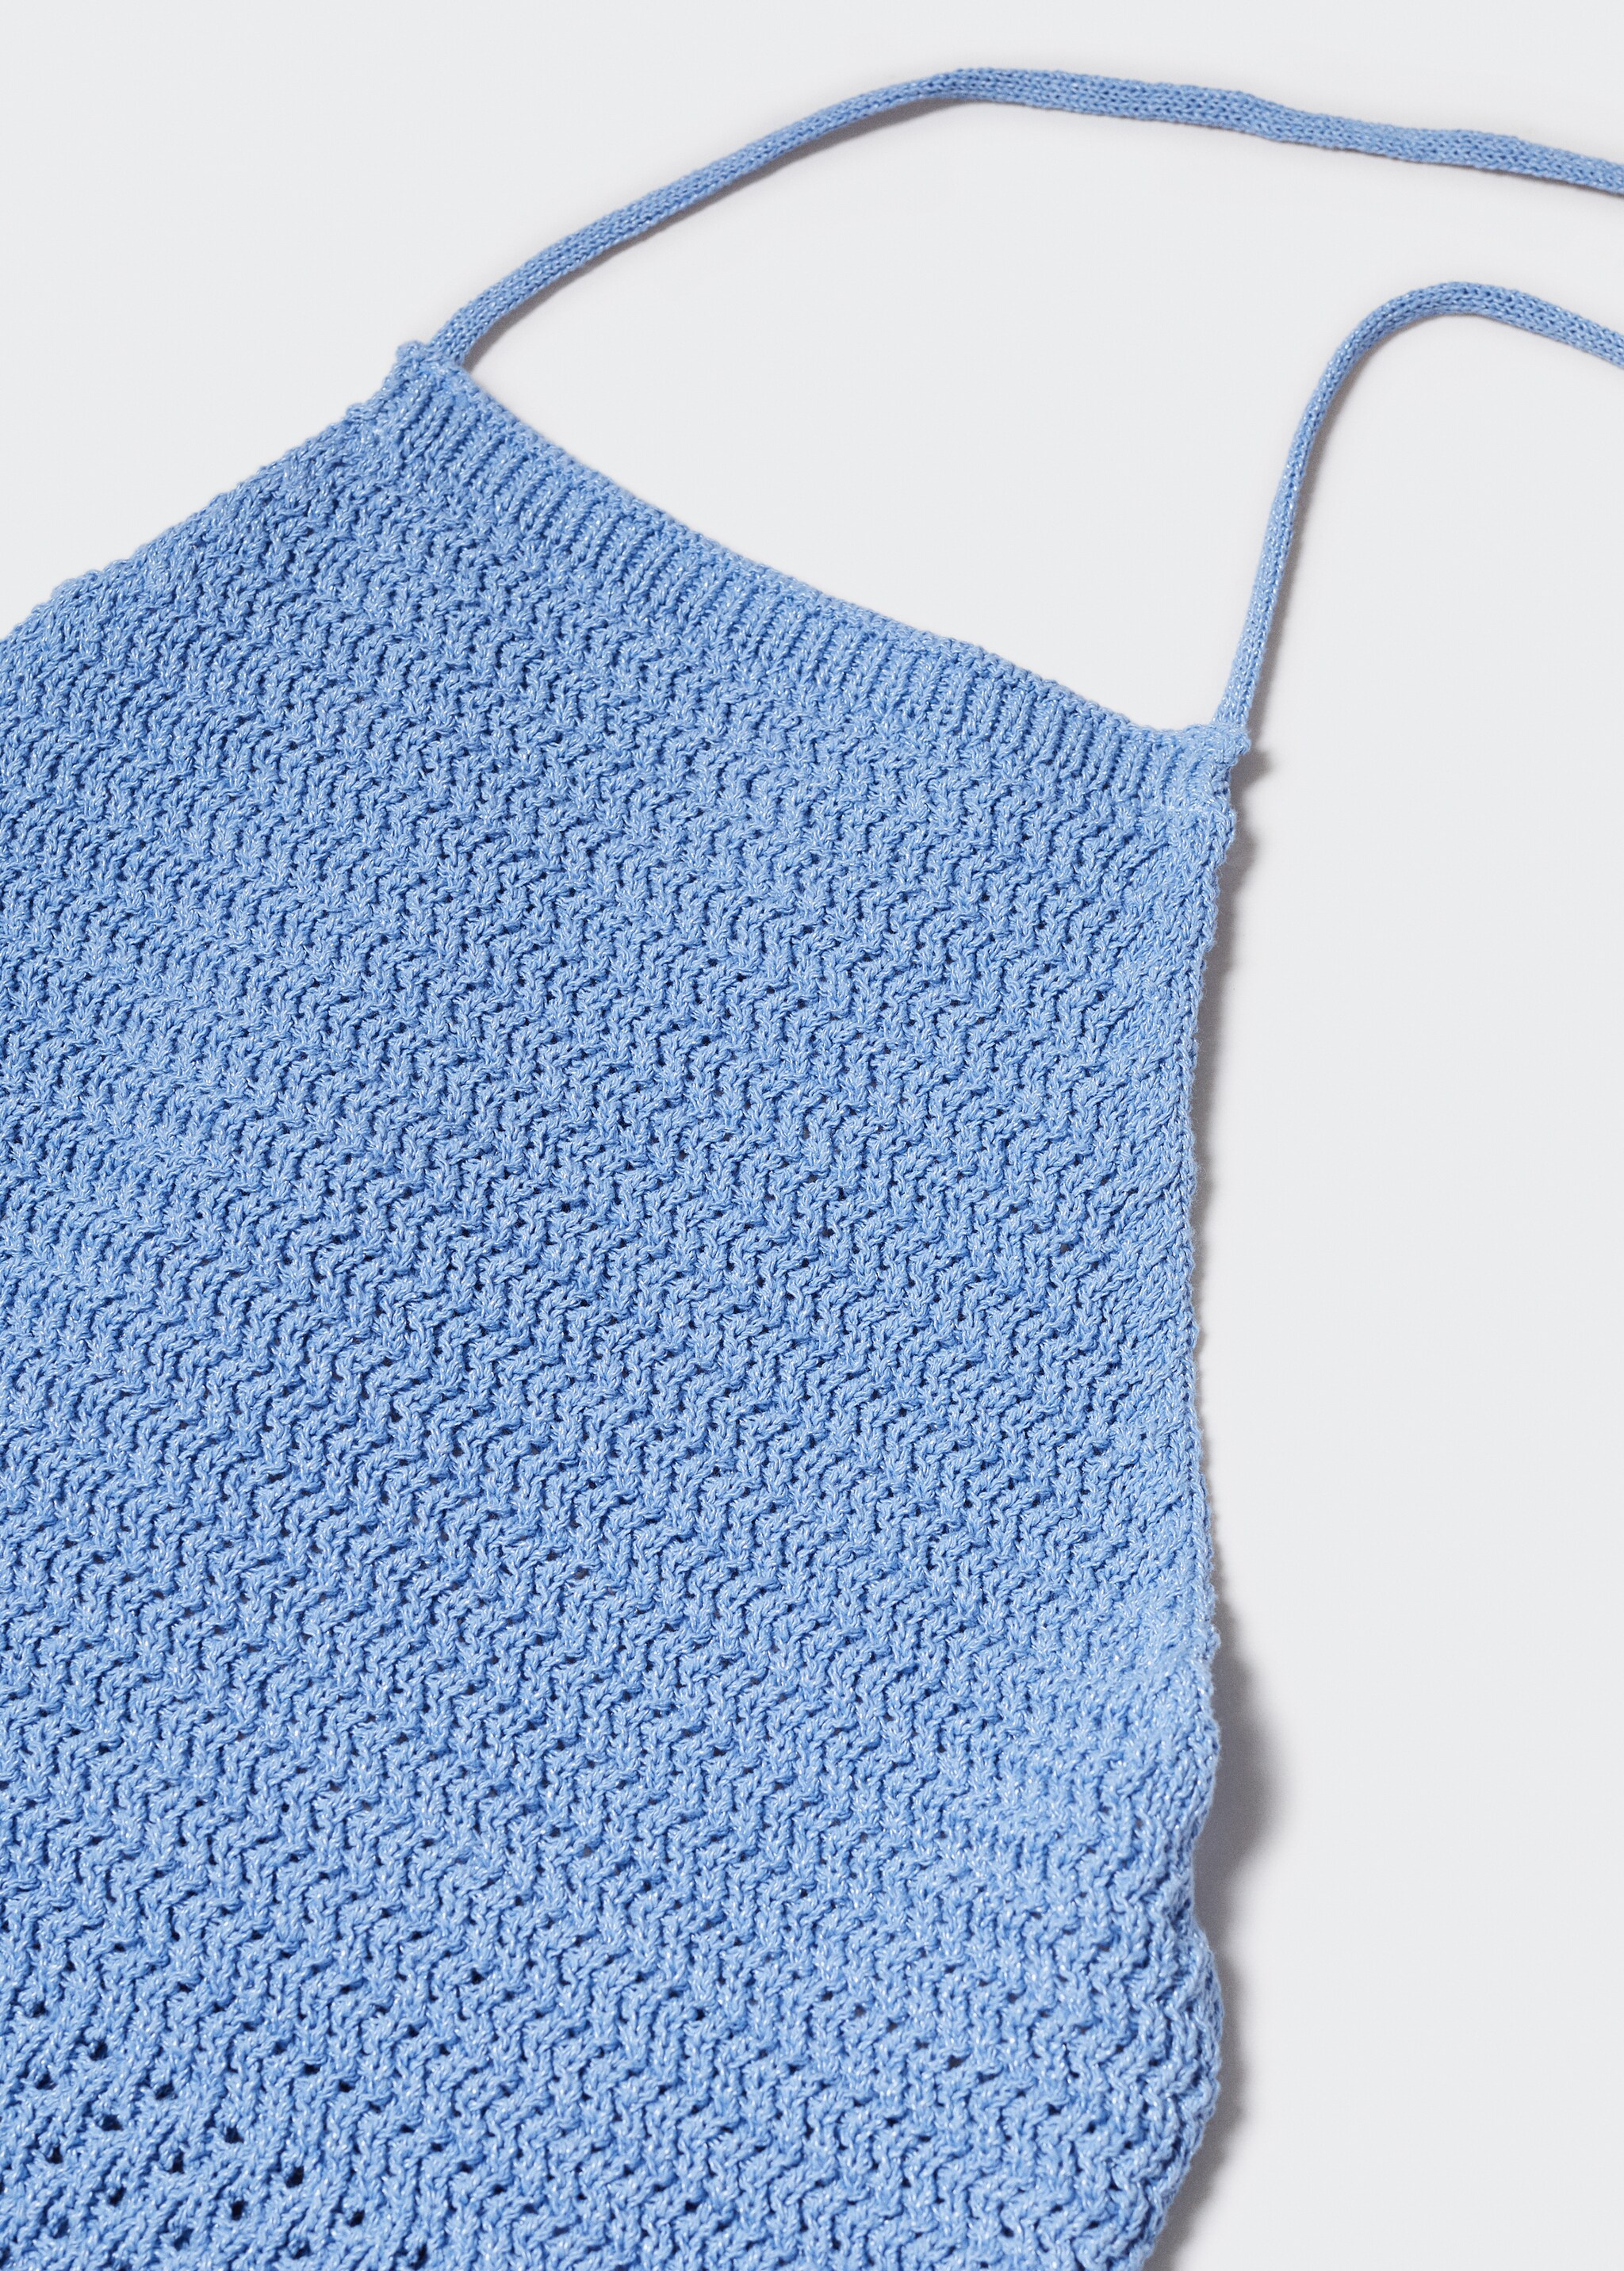 Halter neck crochet top - Details of the article 8